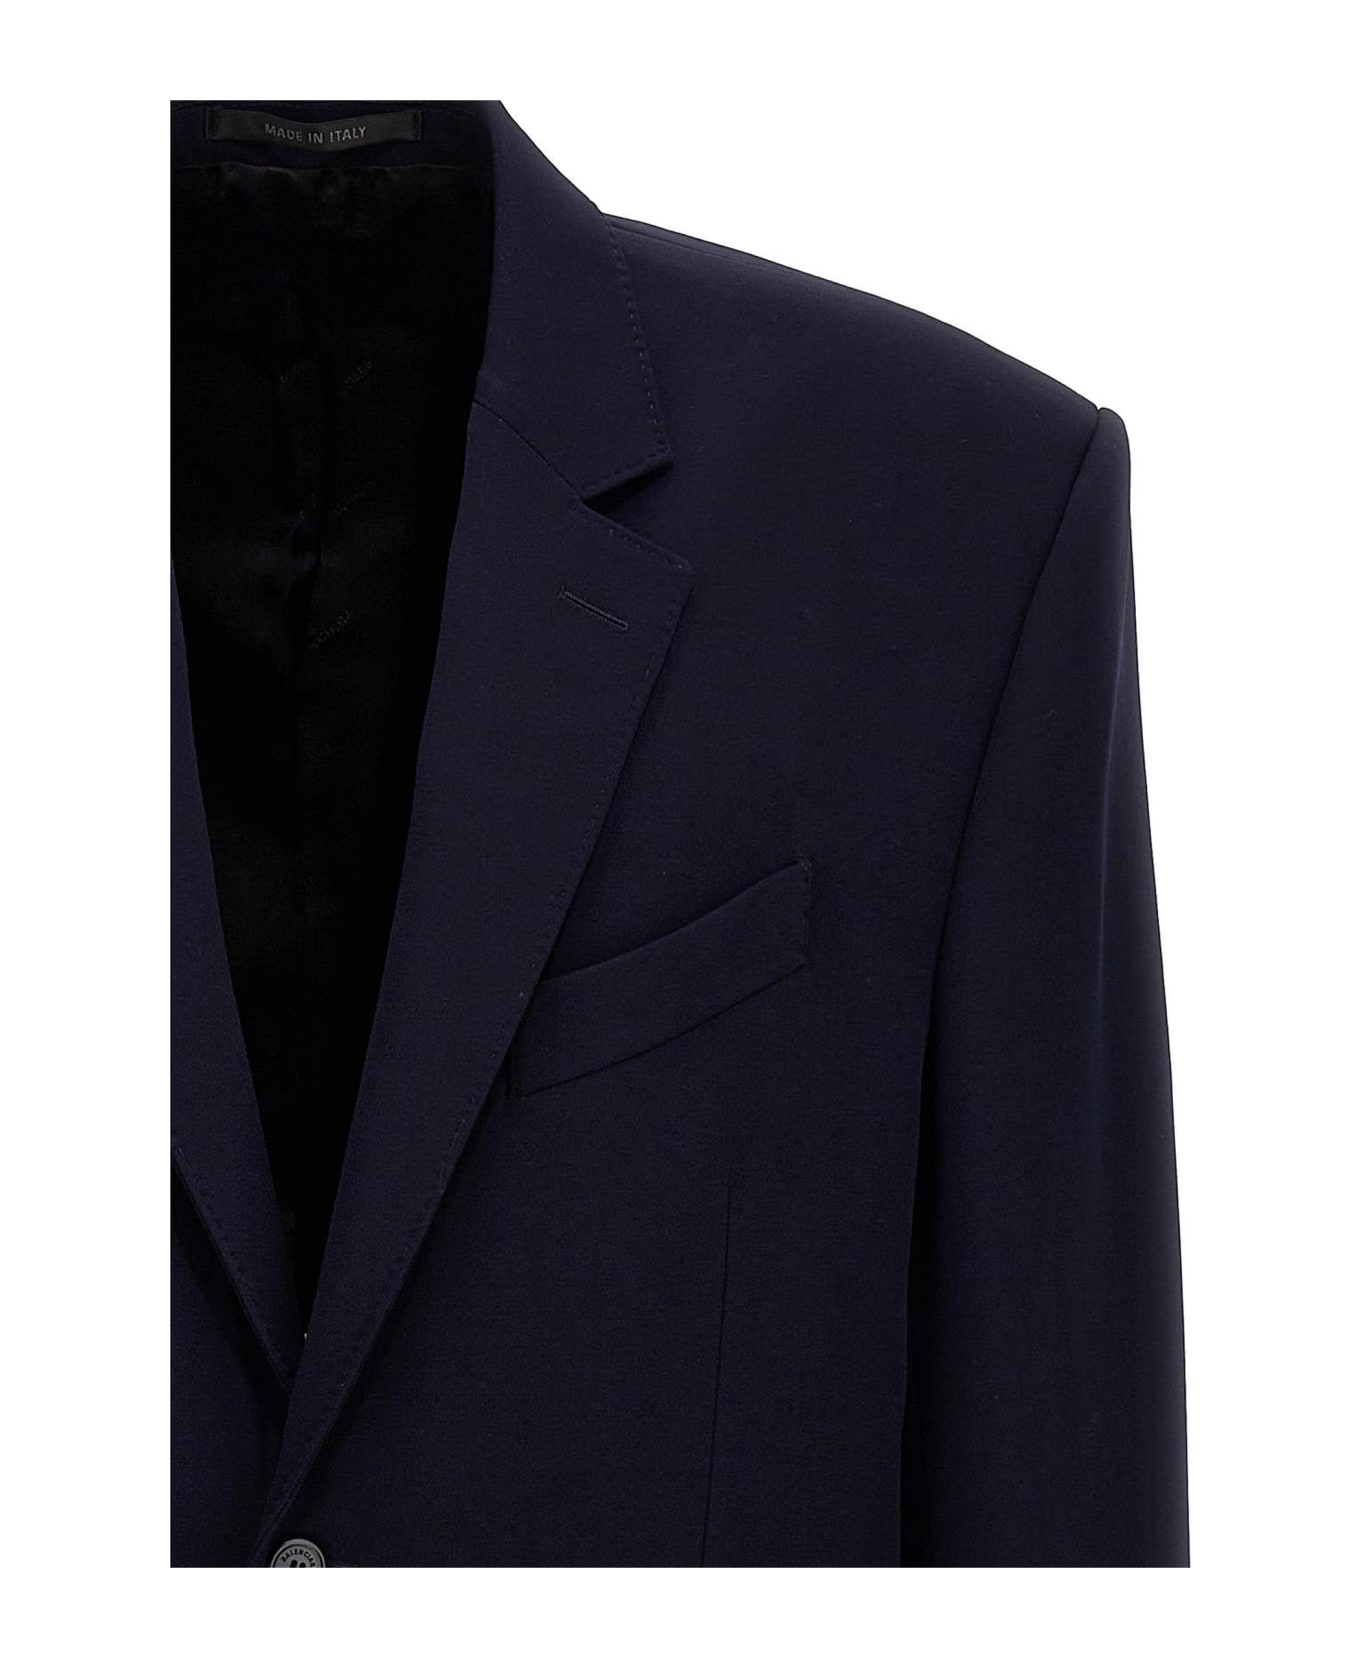 Balenciaga Single-breasted Two-button Jacket - blue ブレザー